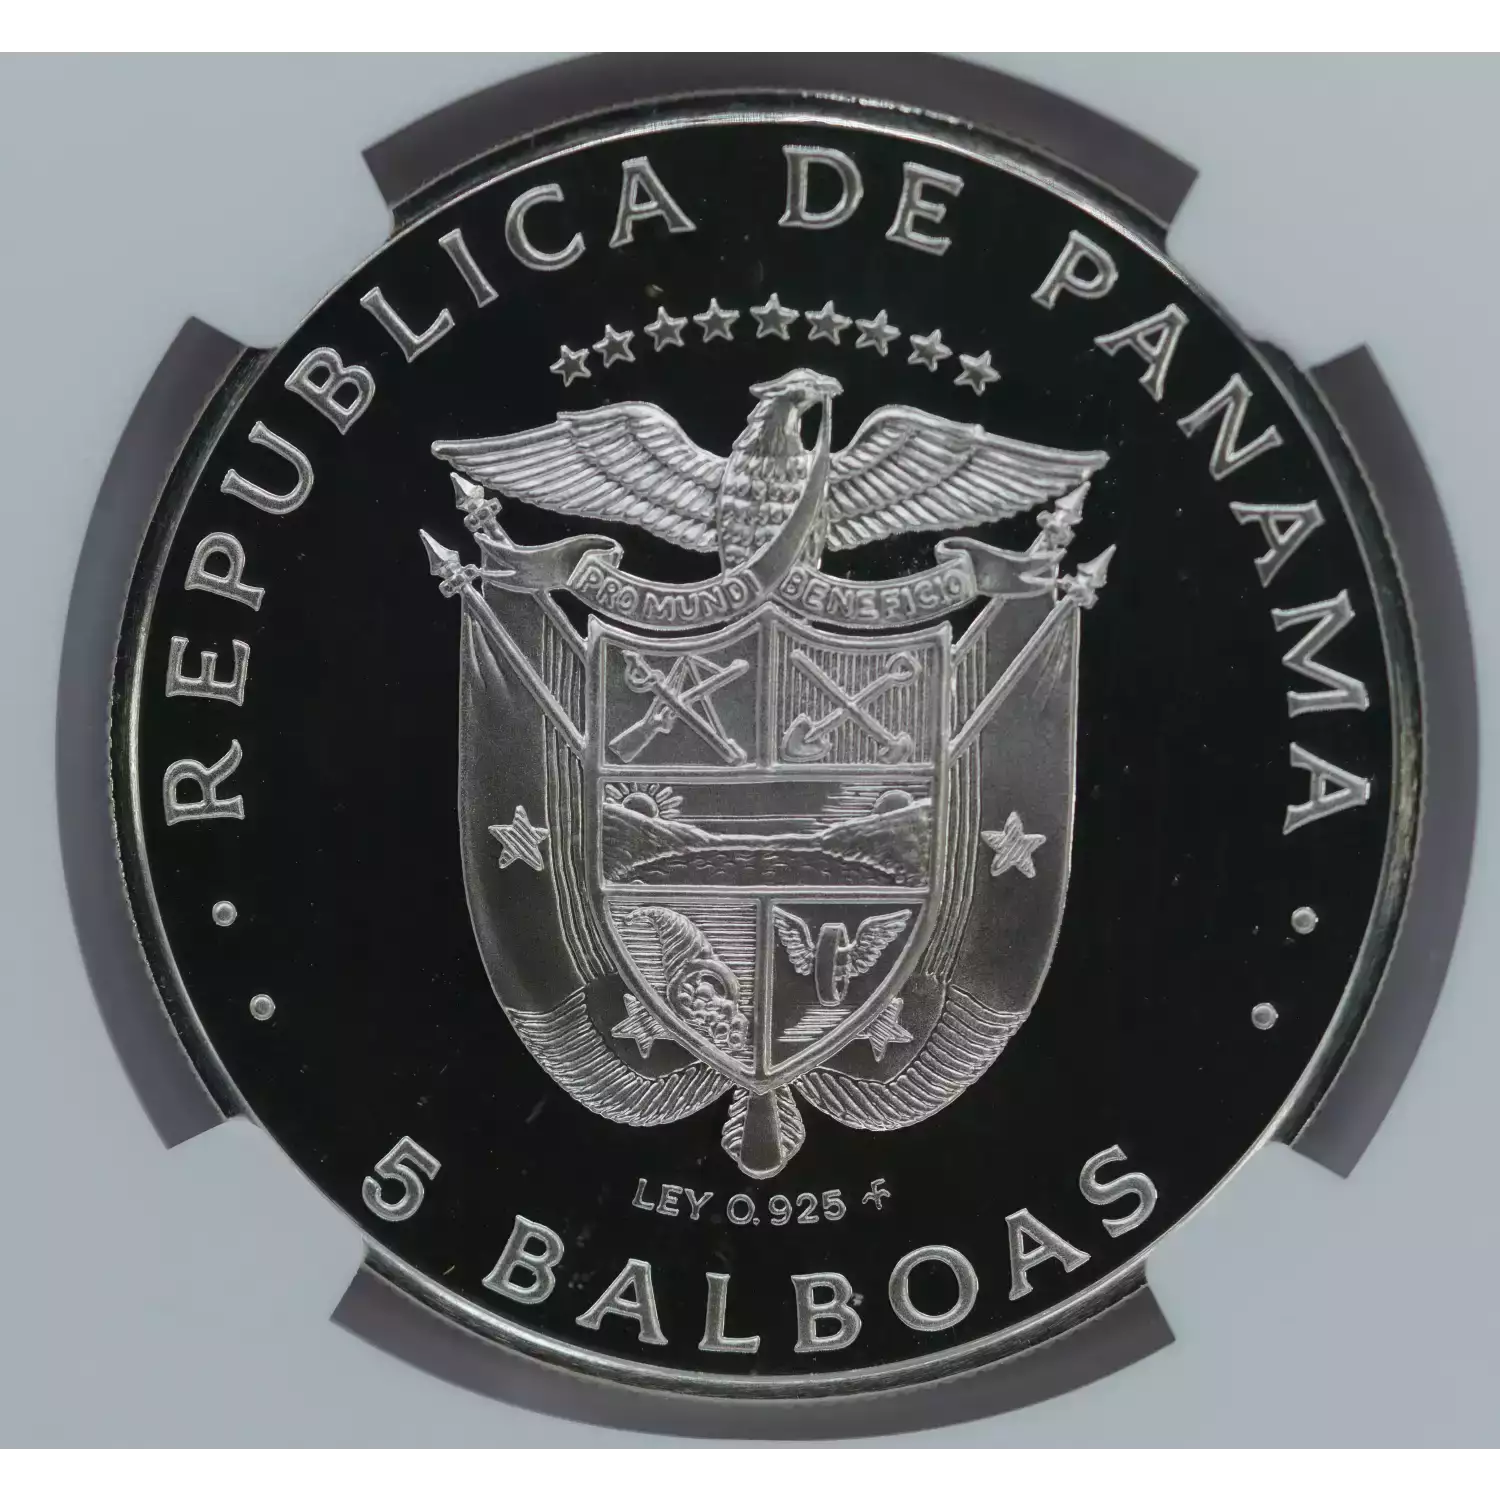 PANAMA Silver 5 BALBOAS